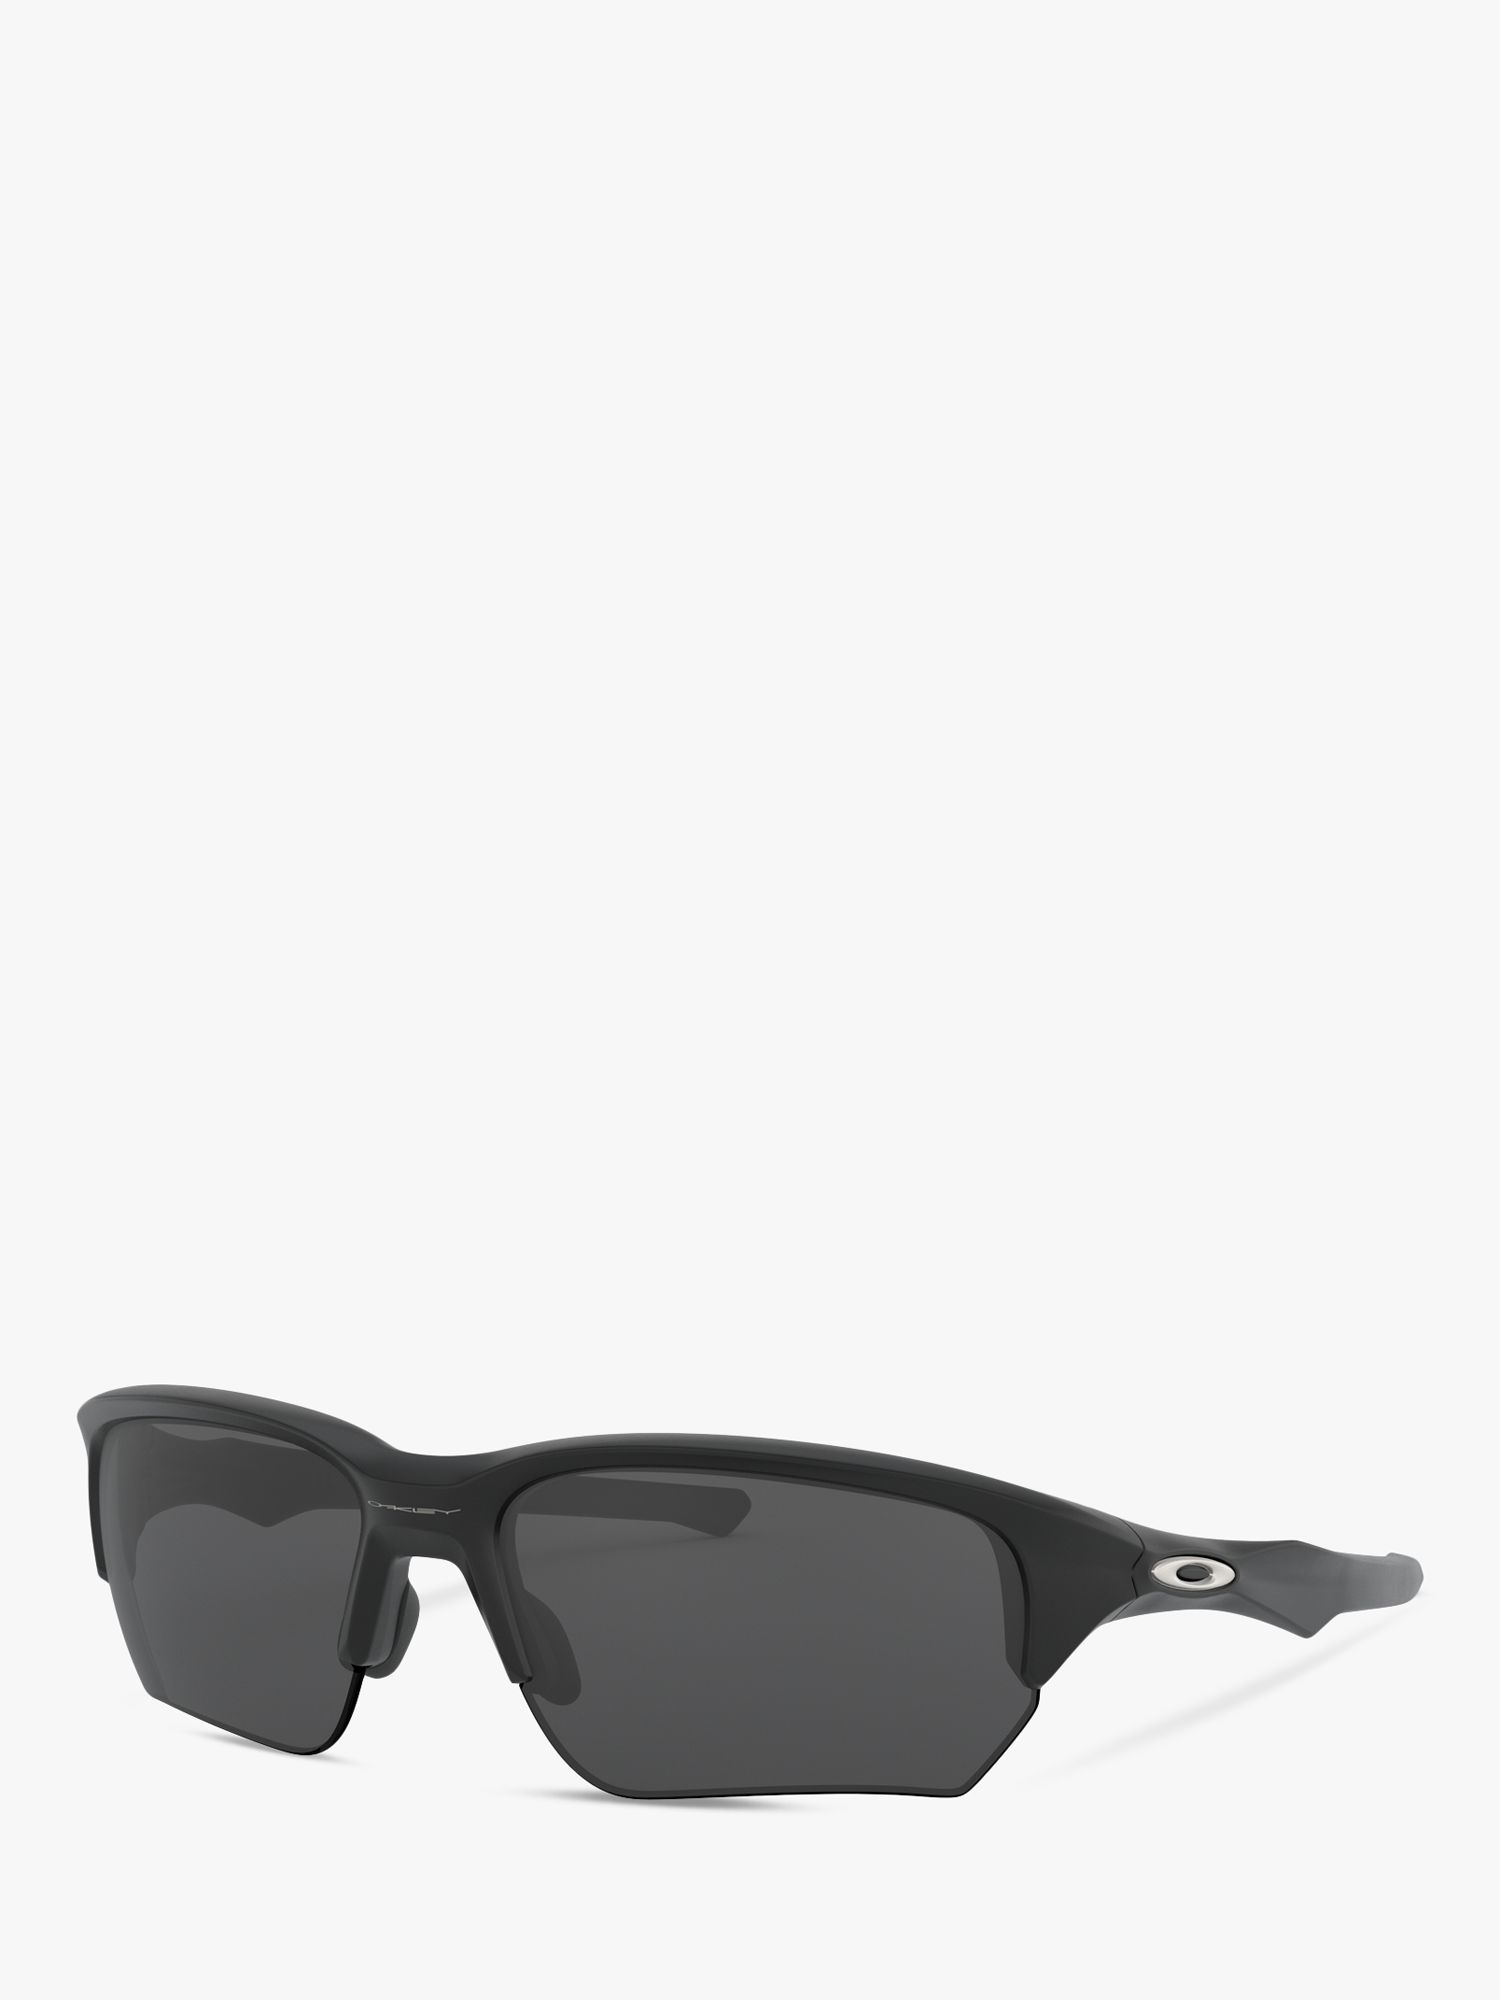 Men's Oakley Sunglasses | John Lewis & Partners